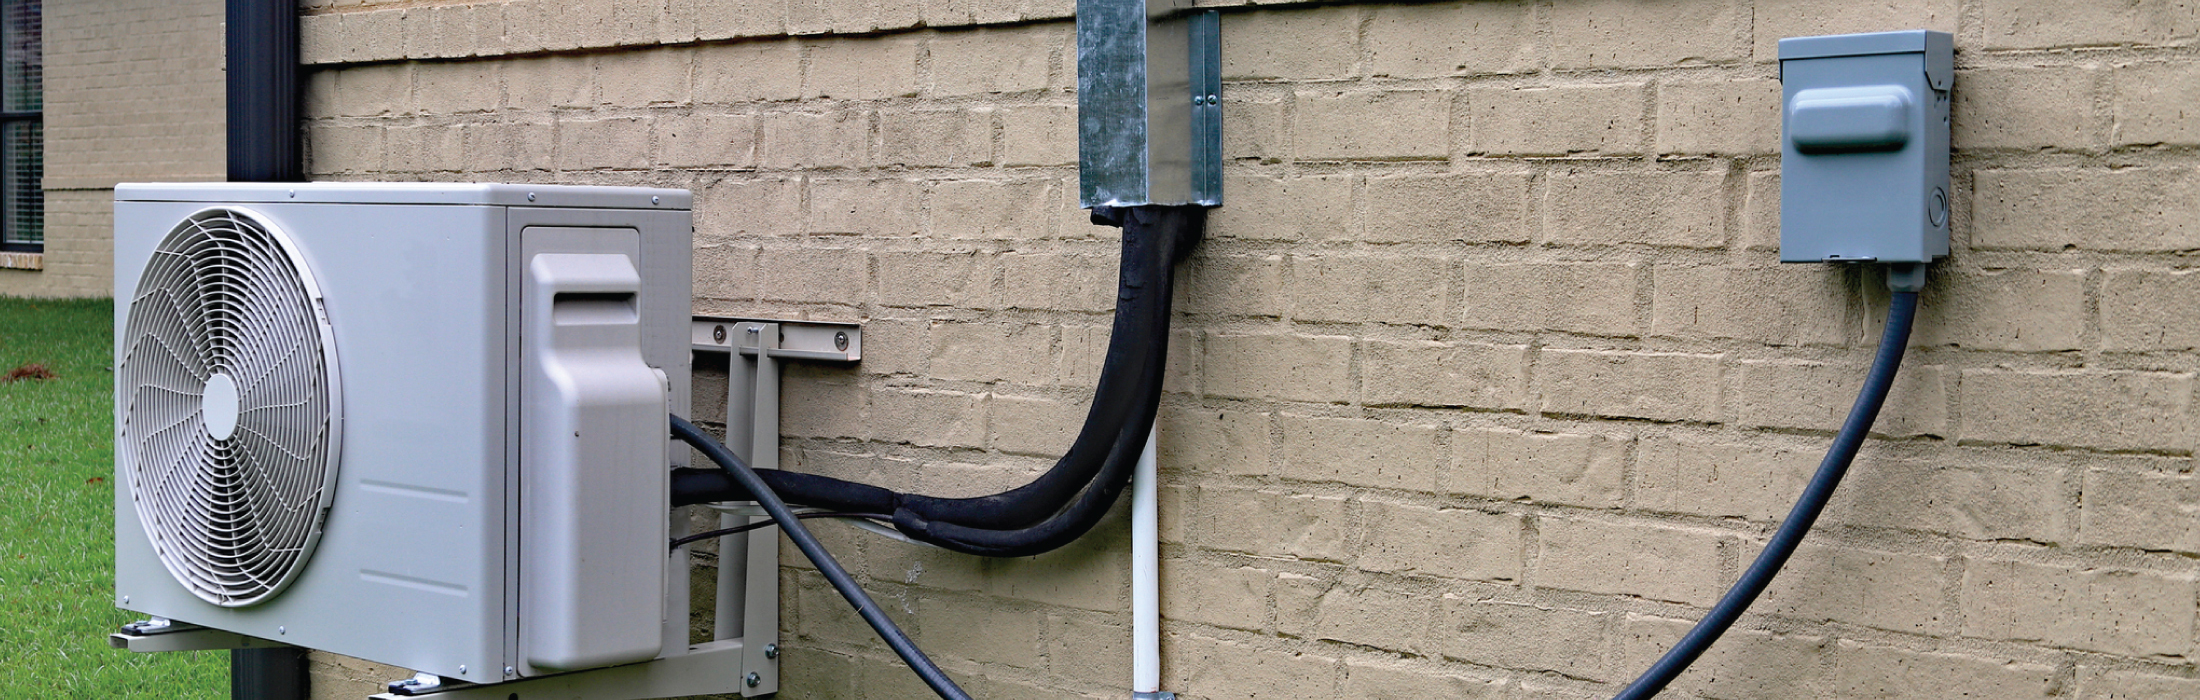 image of an HVAC unit outside a home